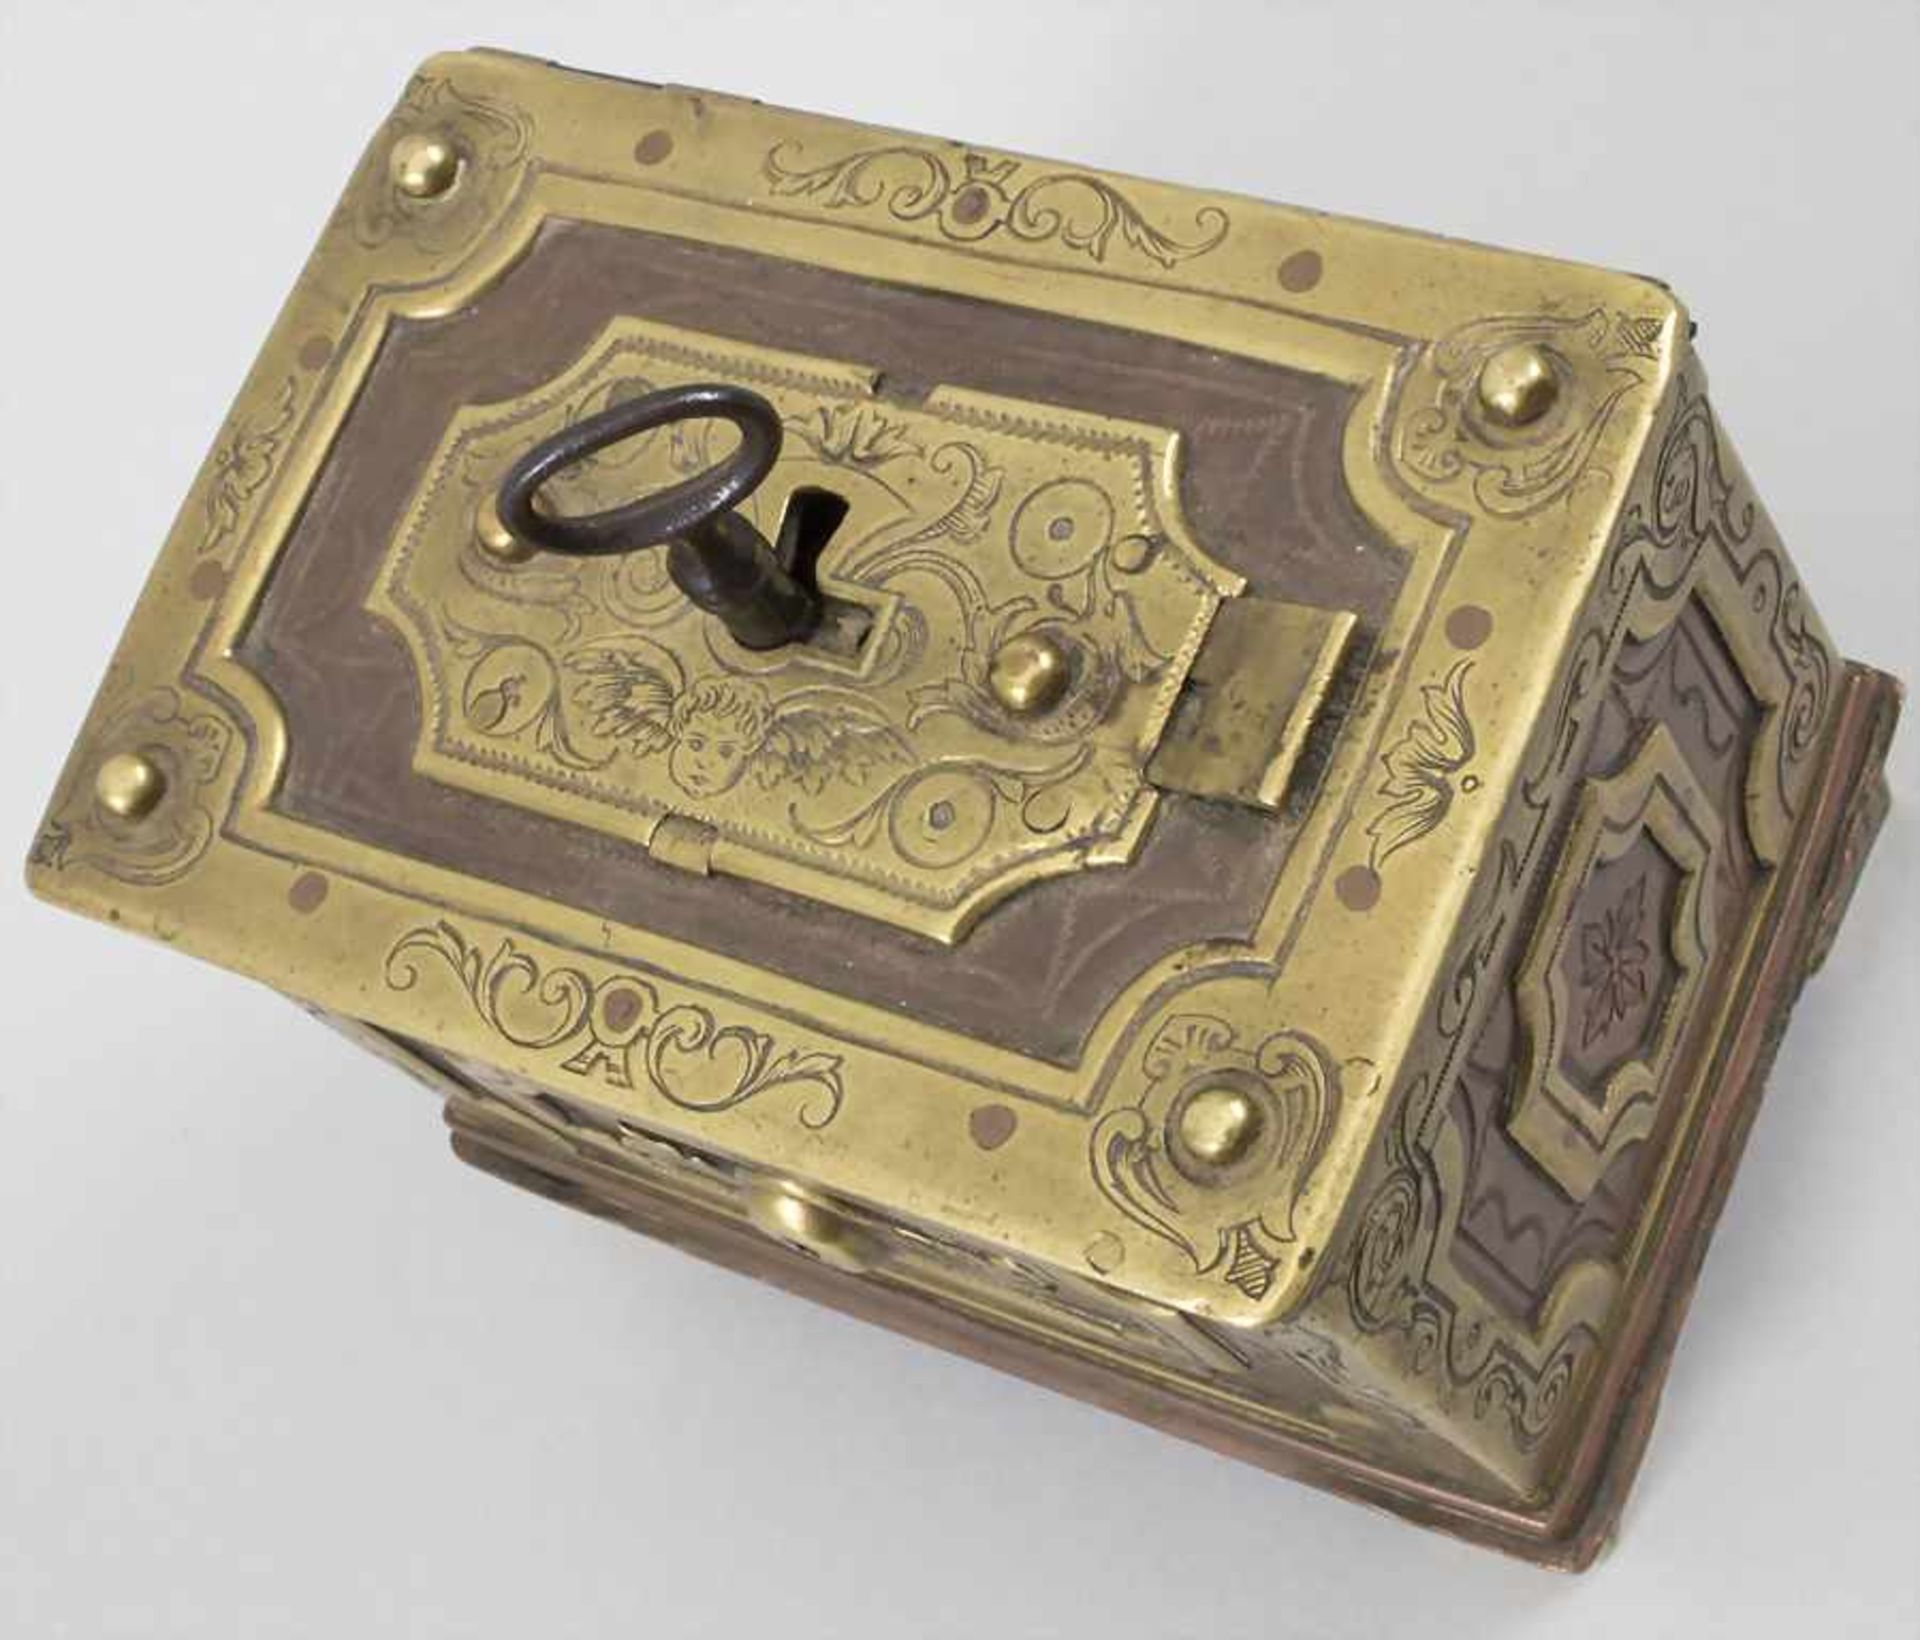 Abschließbare Kassette / A lockable casket, 19. Jh. - Image 3 of 6